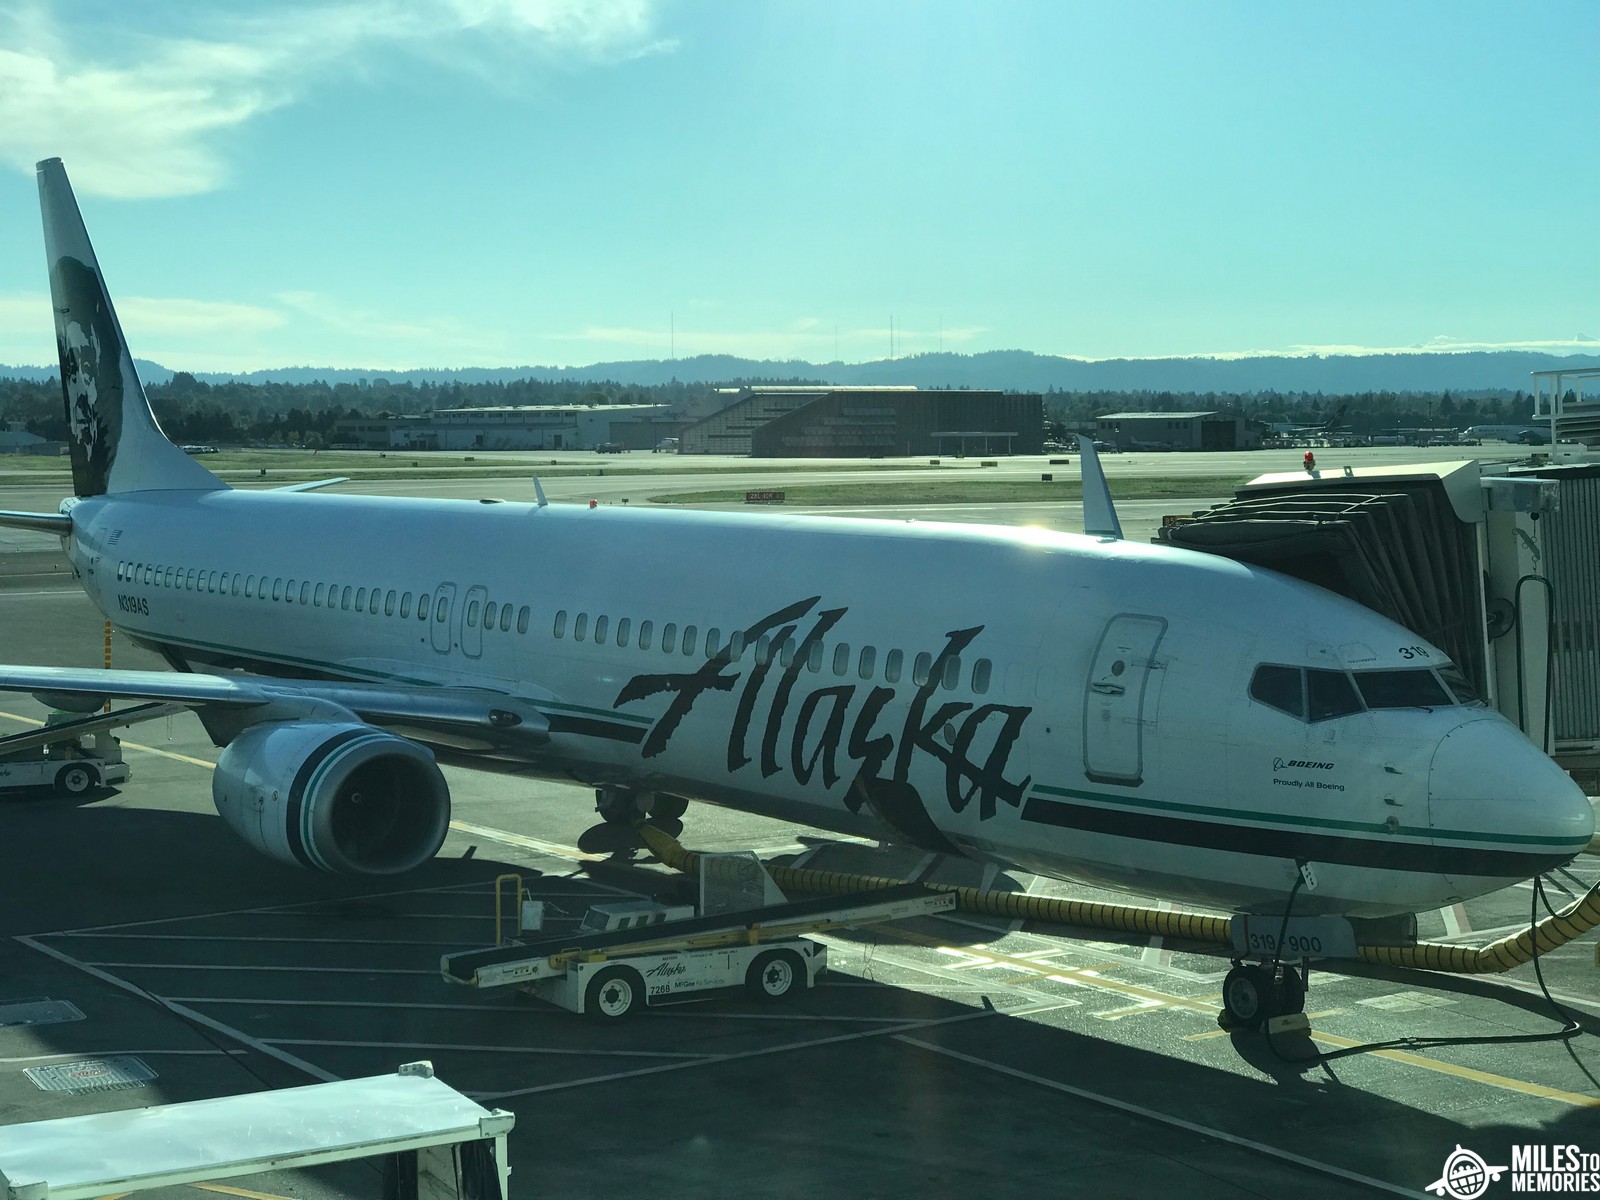 Alaska airlines saver fare